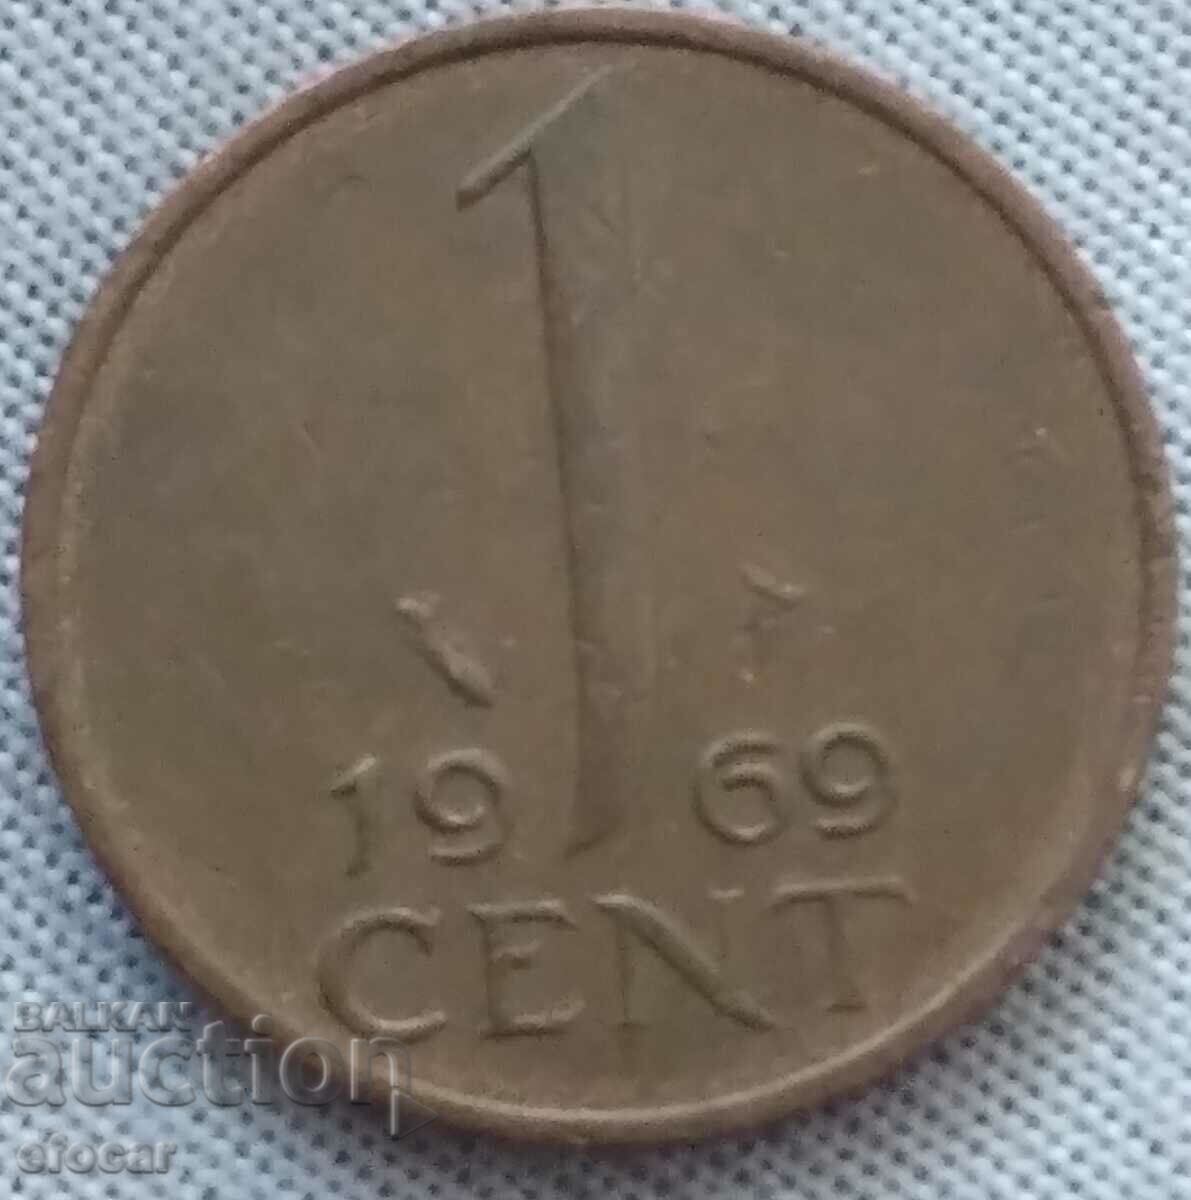 1 cent Netherlands 1969 start from 0.01 cent